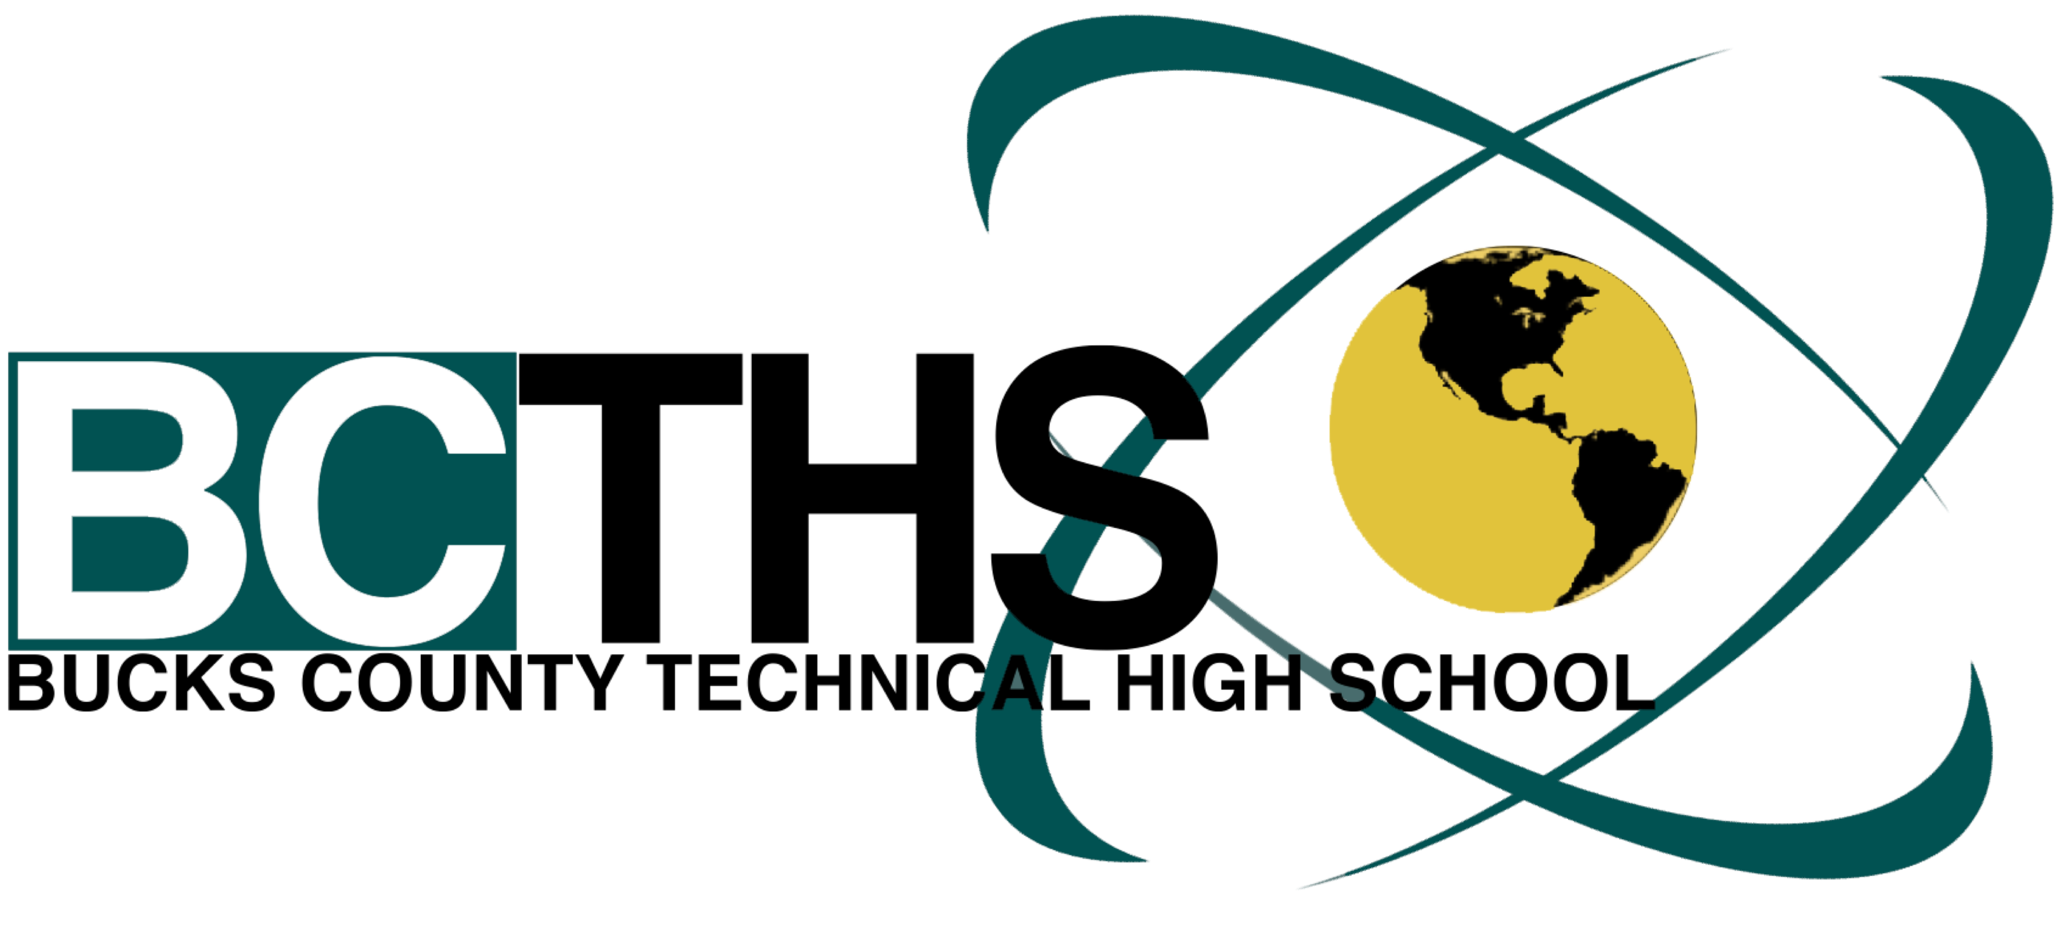 Bucks County Technical High School logo